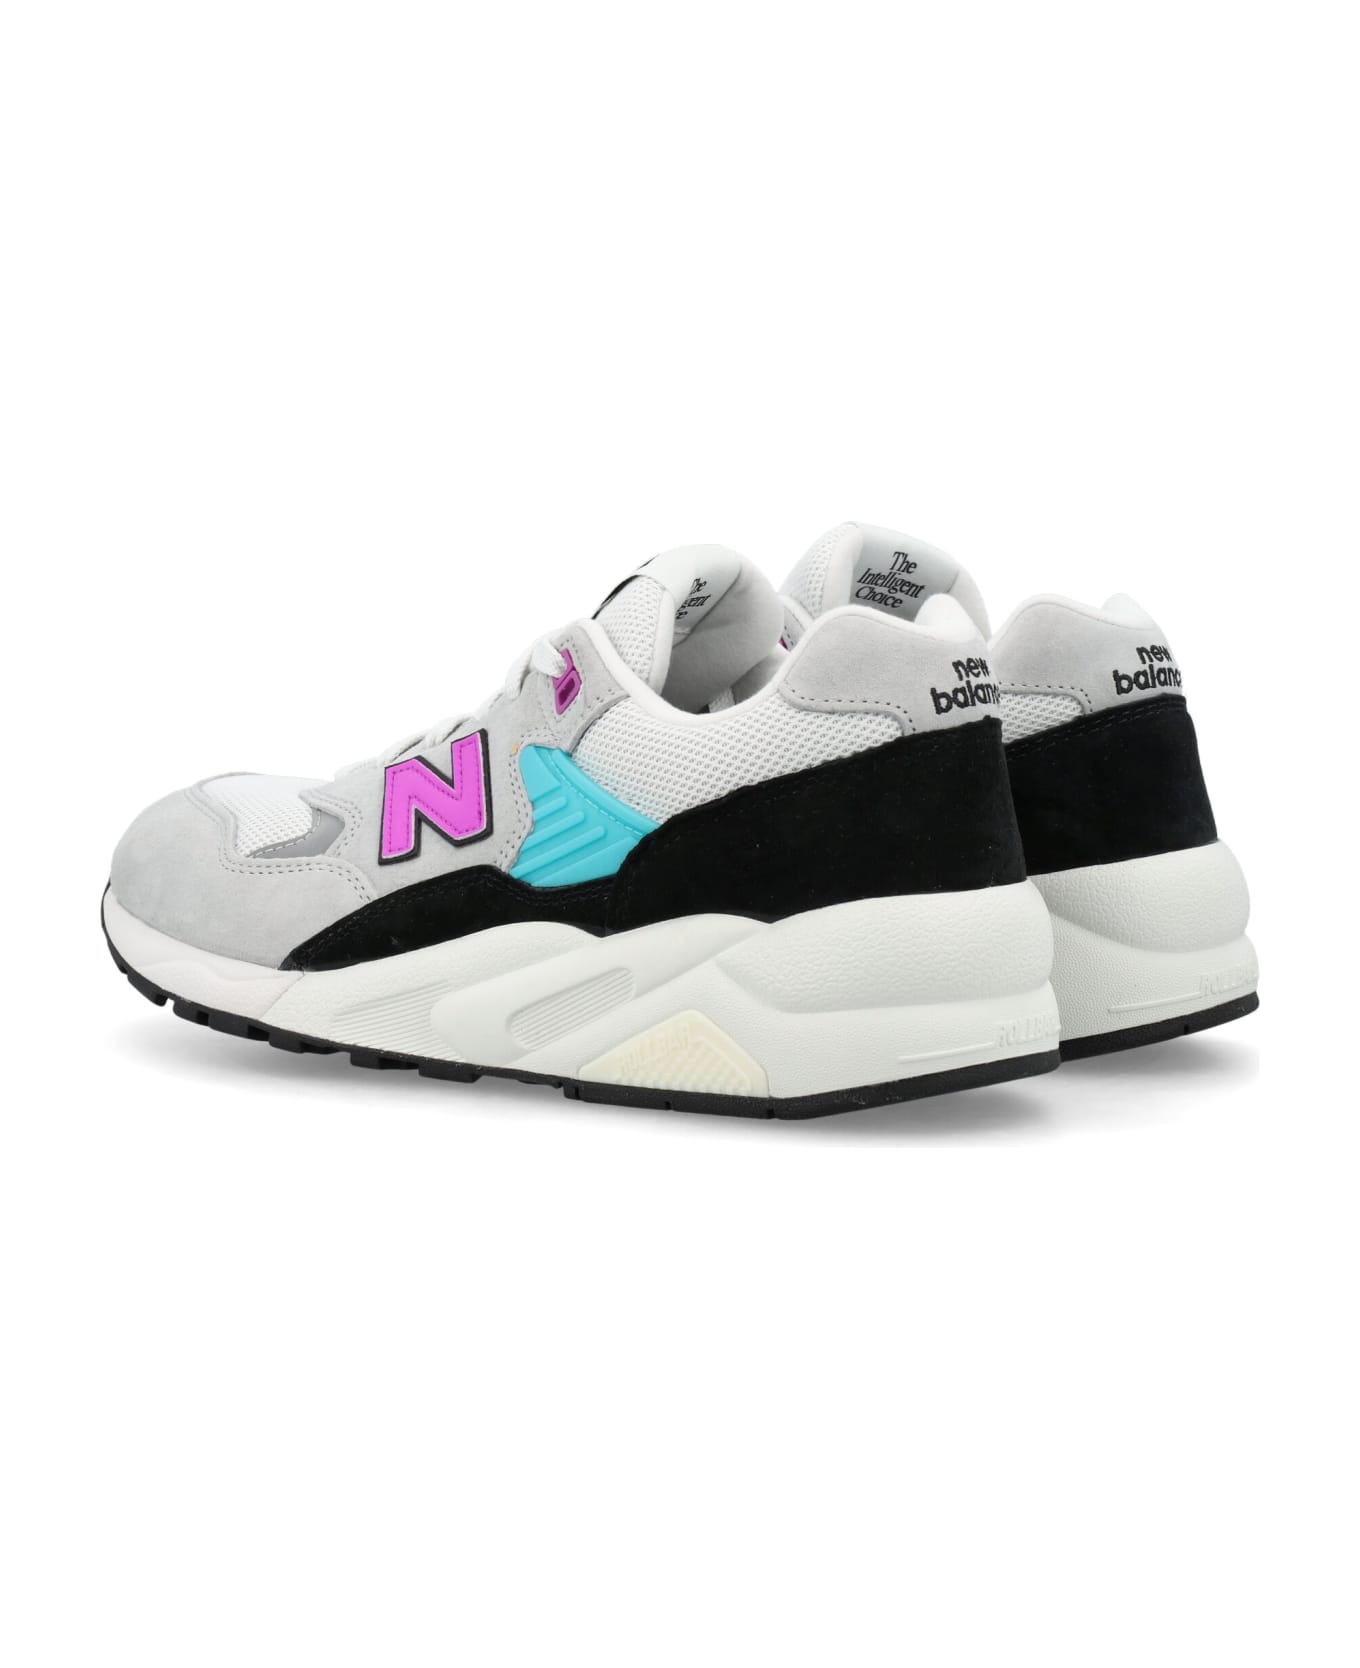 New Balance 580 Low Top Sneakers - LIGHT GREY/PINK